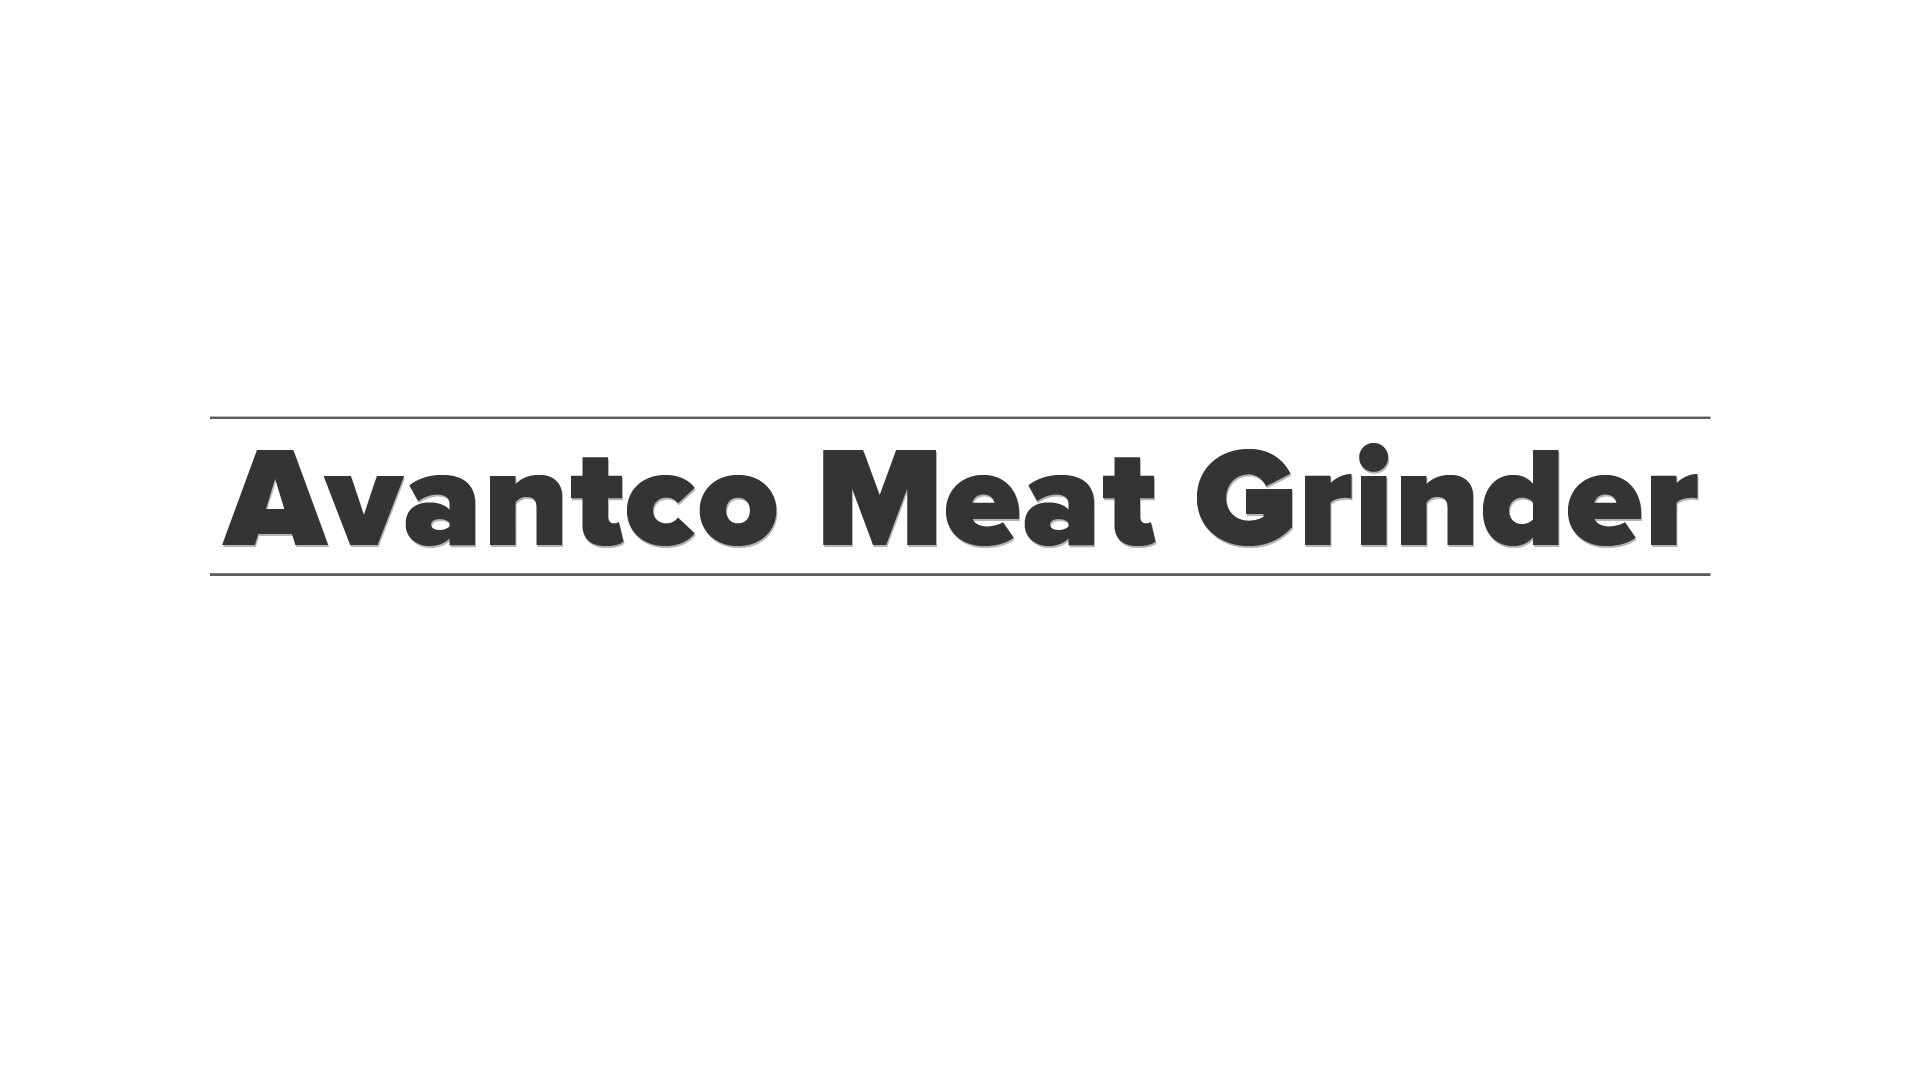 https://www.webstaurantstore.com/images/videos/extra_large/avantco_meat_grinder.jpg